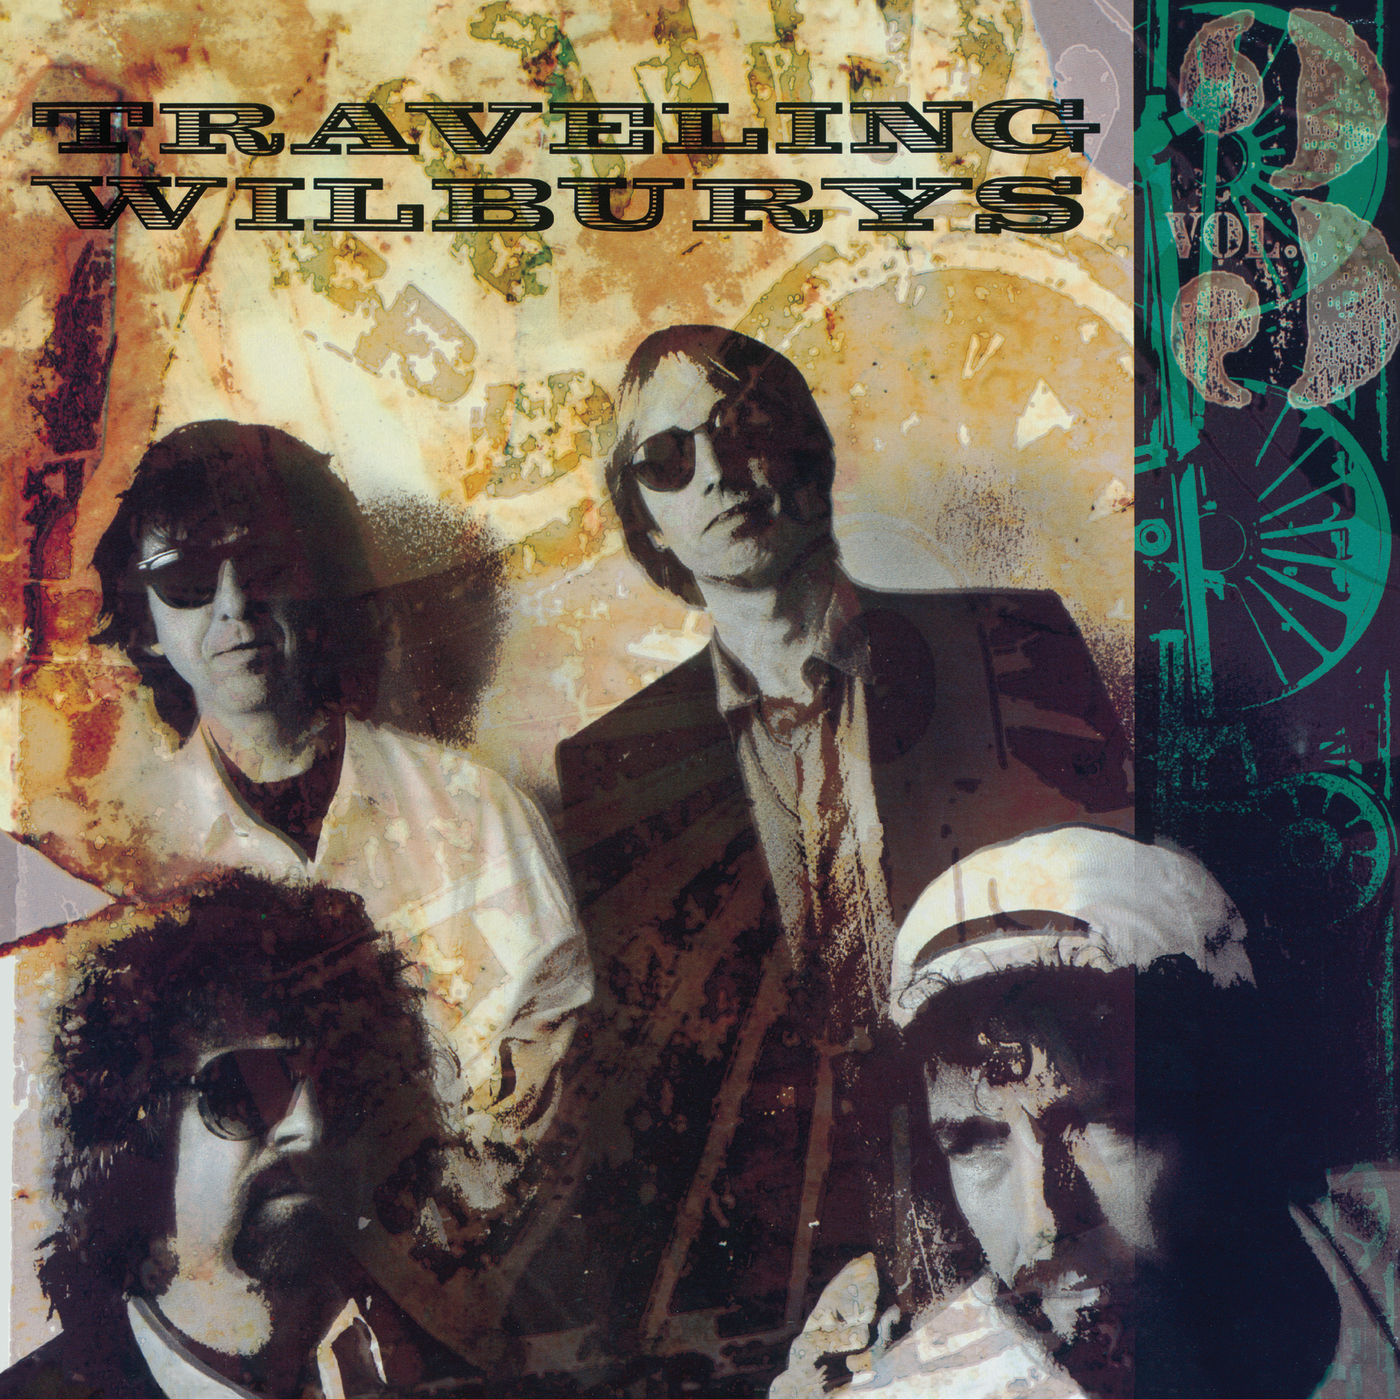 The Traveling Wilburys – The Traveling Wilburys, Vol. 3 (Remastered 2016)